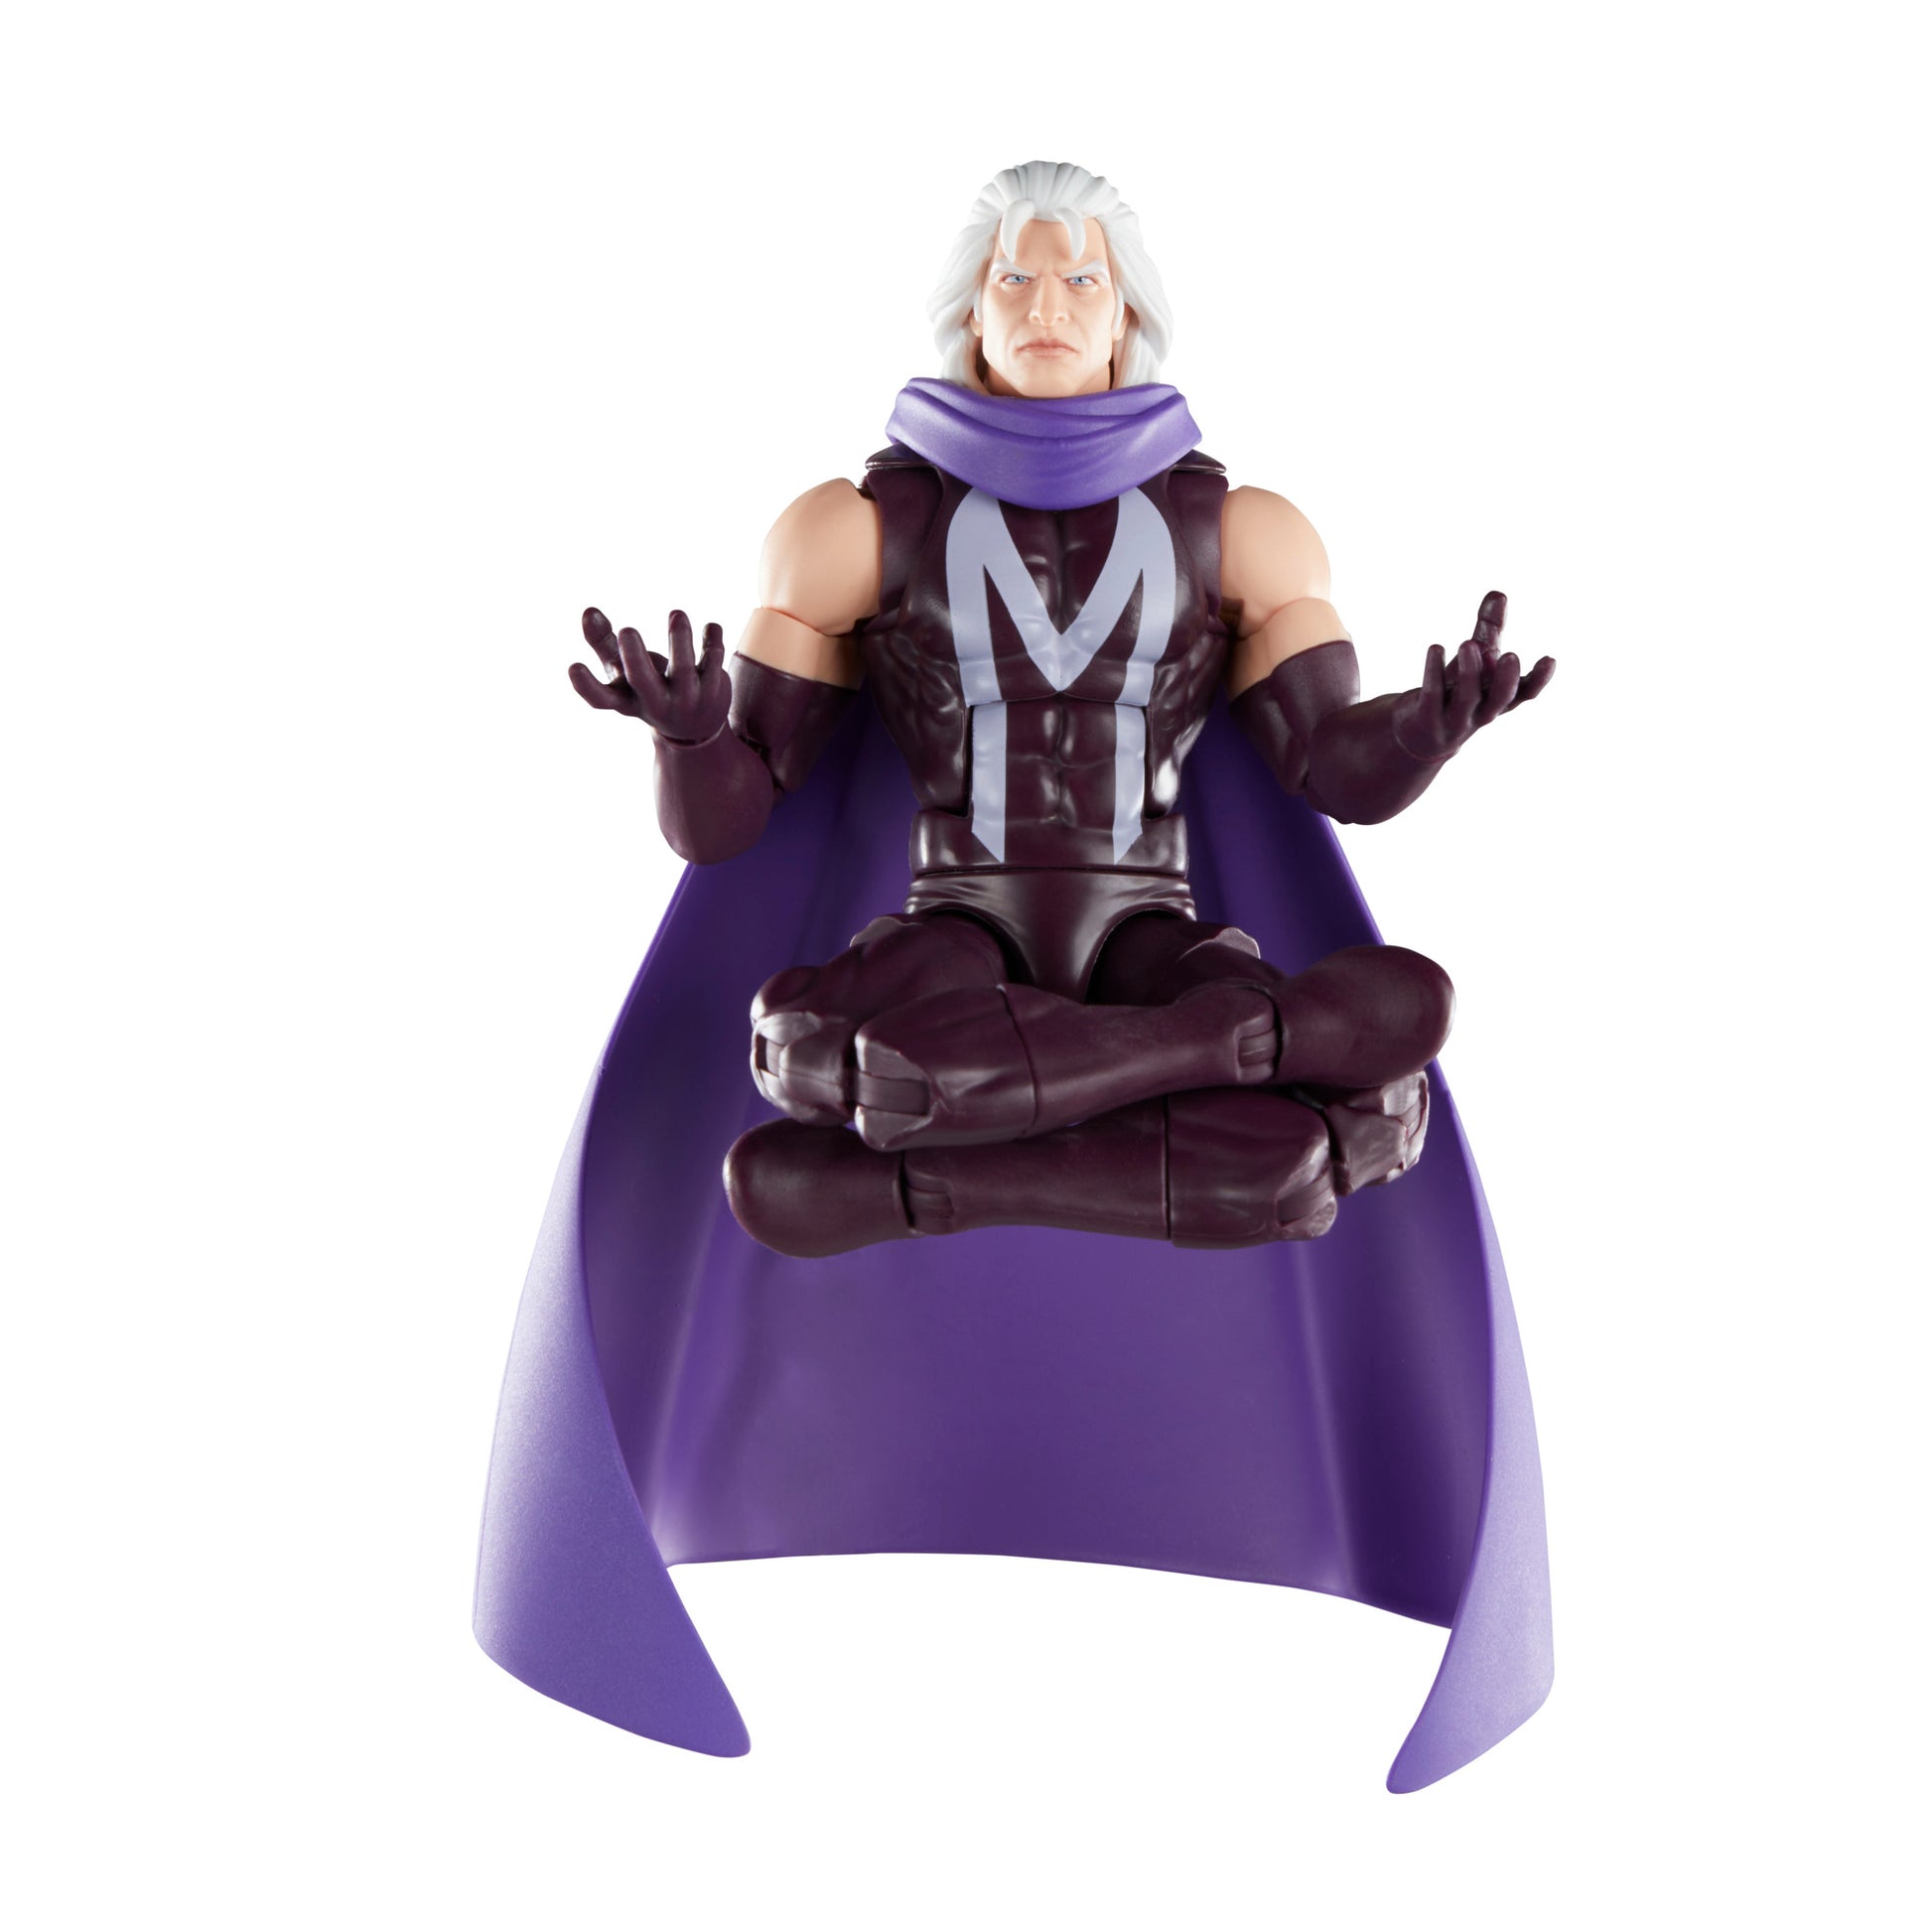 Marvel Legends Series Magneto, X-Men ‘97 Collectible 6 Inch Action Figure